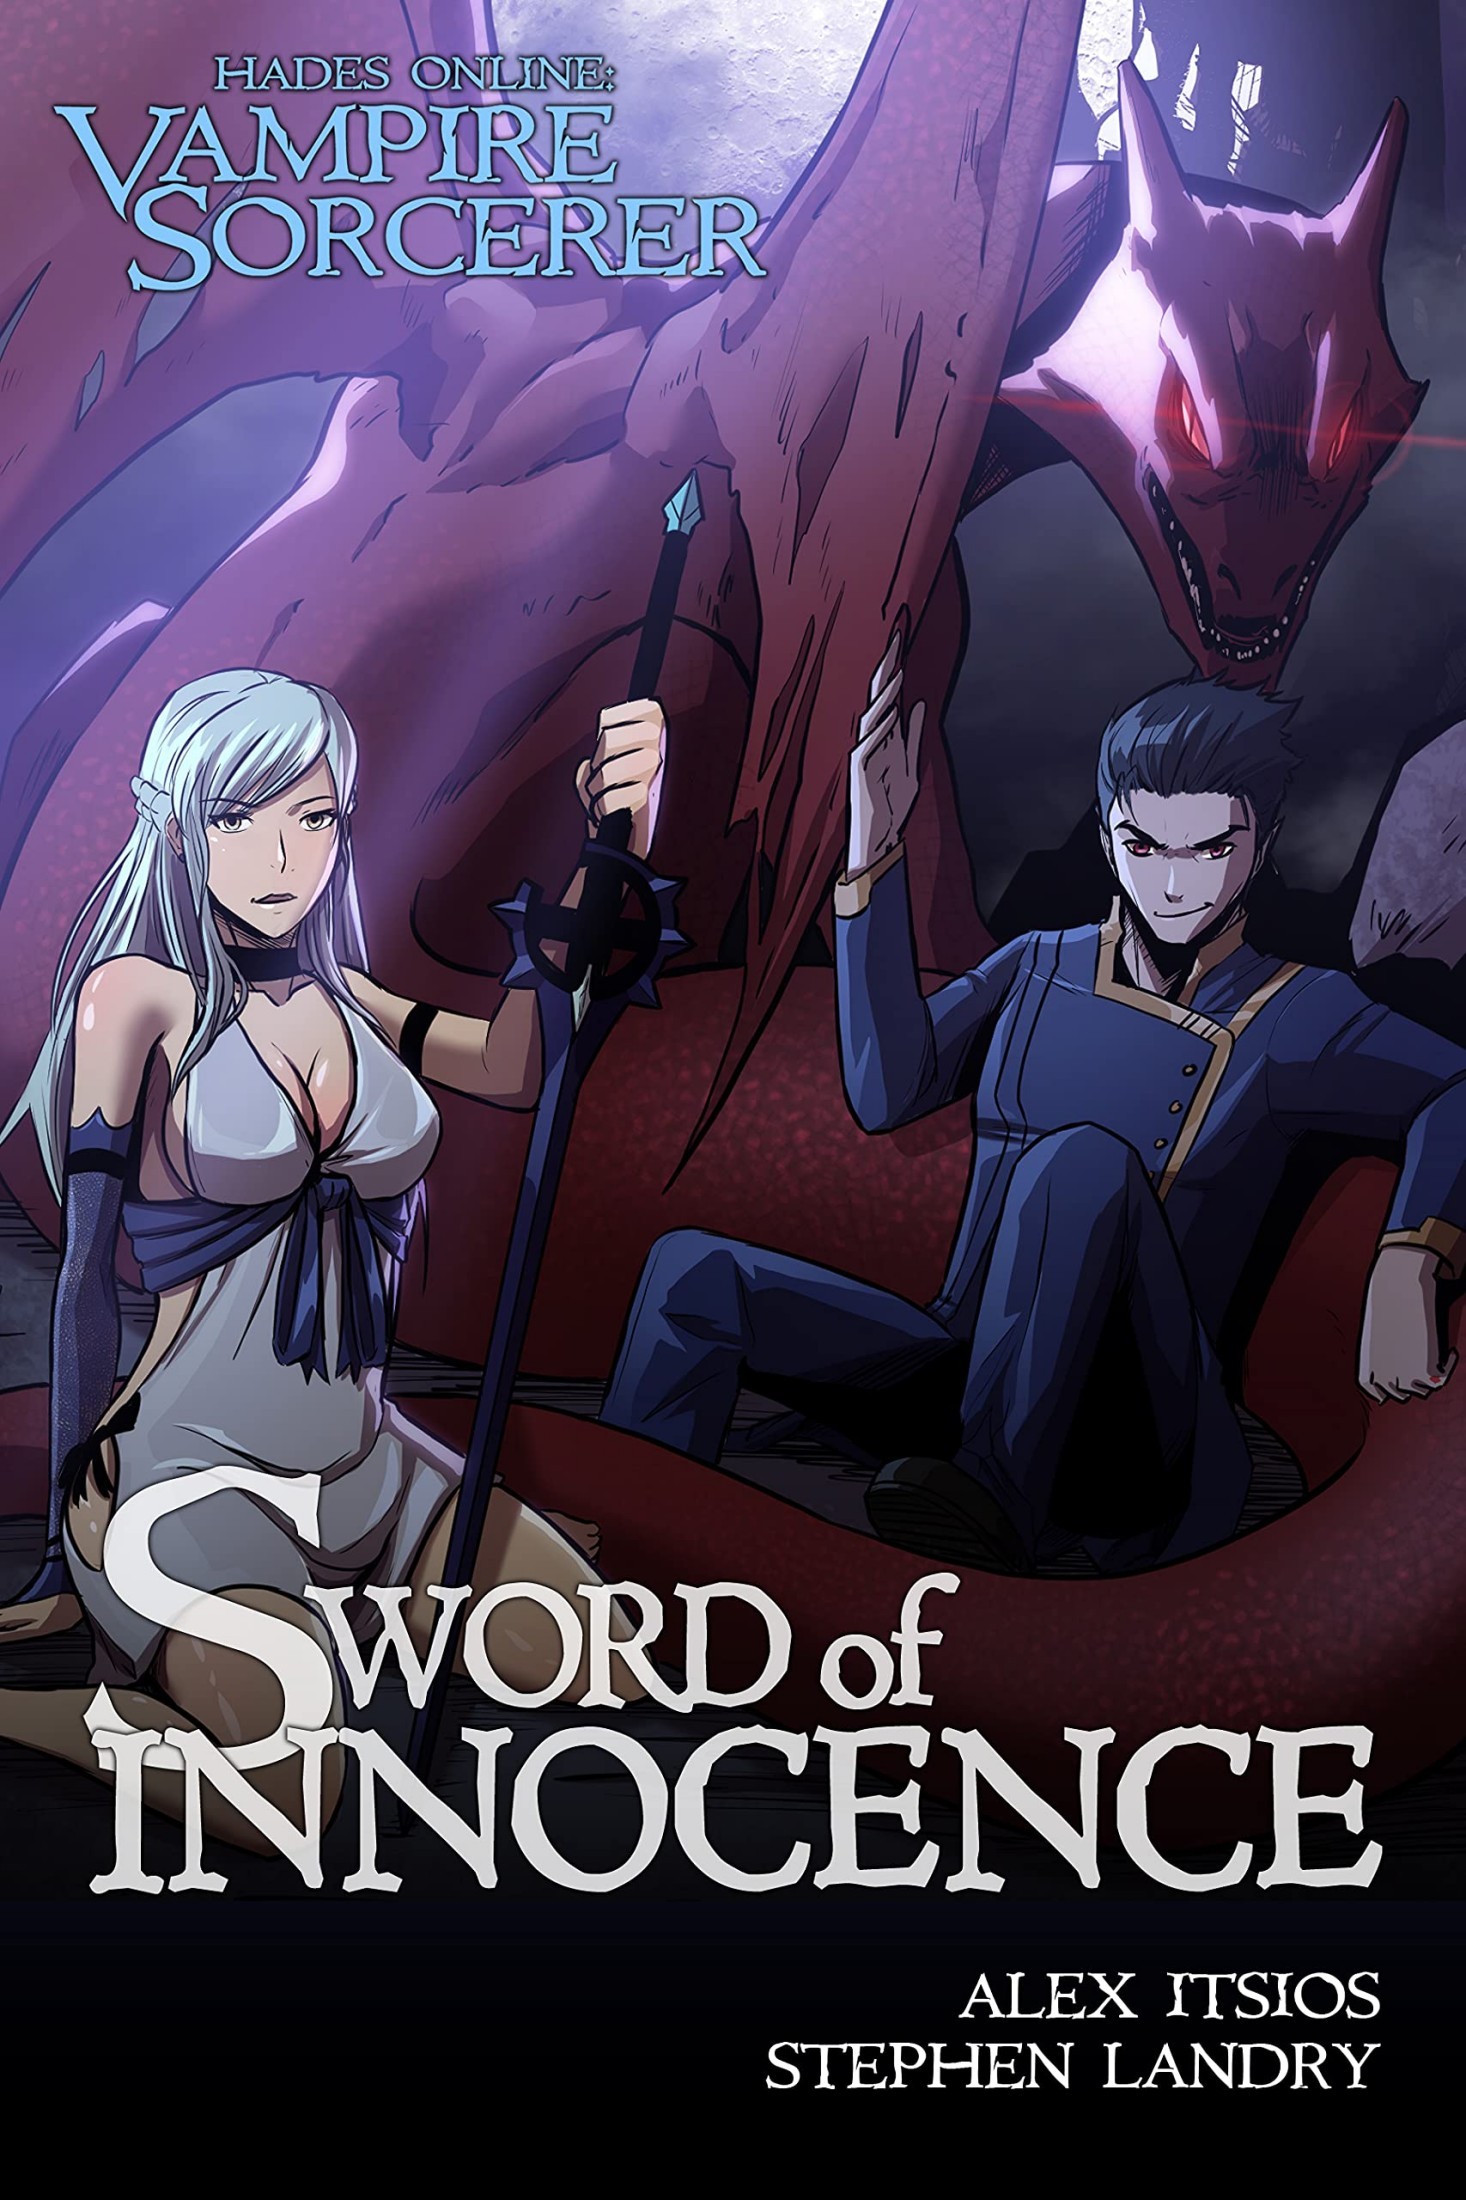 Hades Online: Vampire Sorcerer: Sword of Innocence